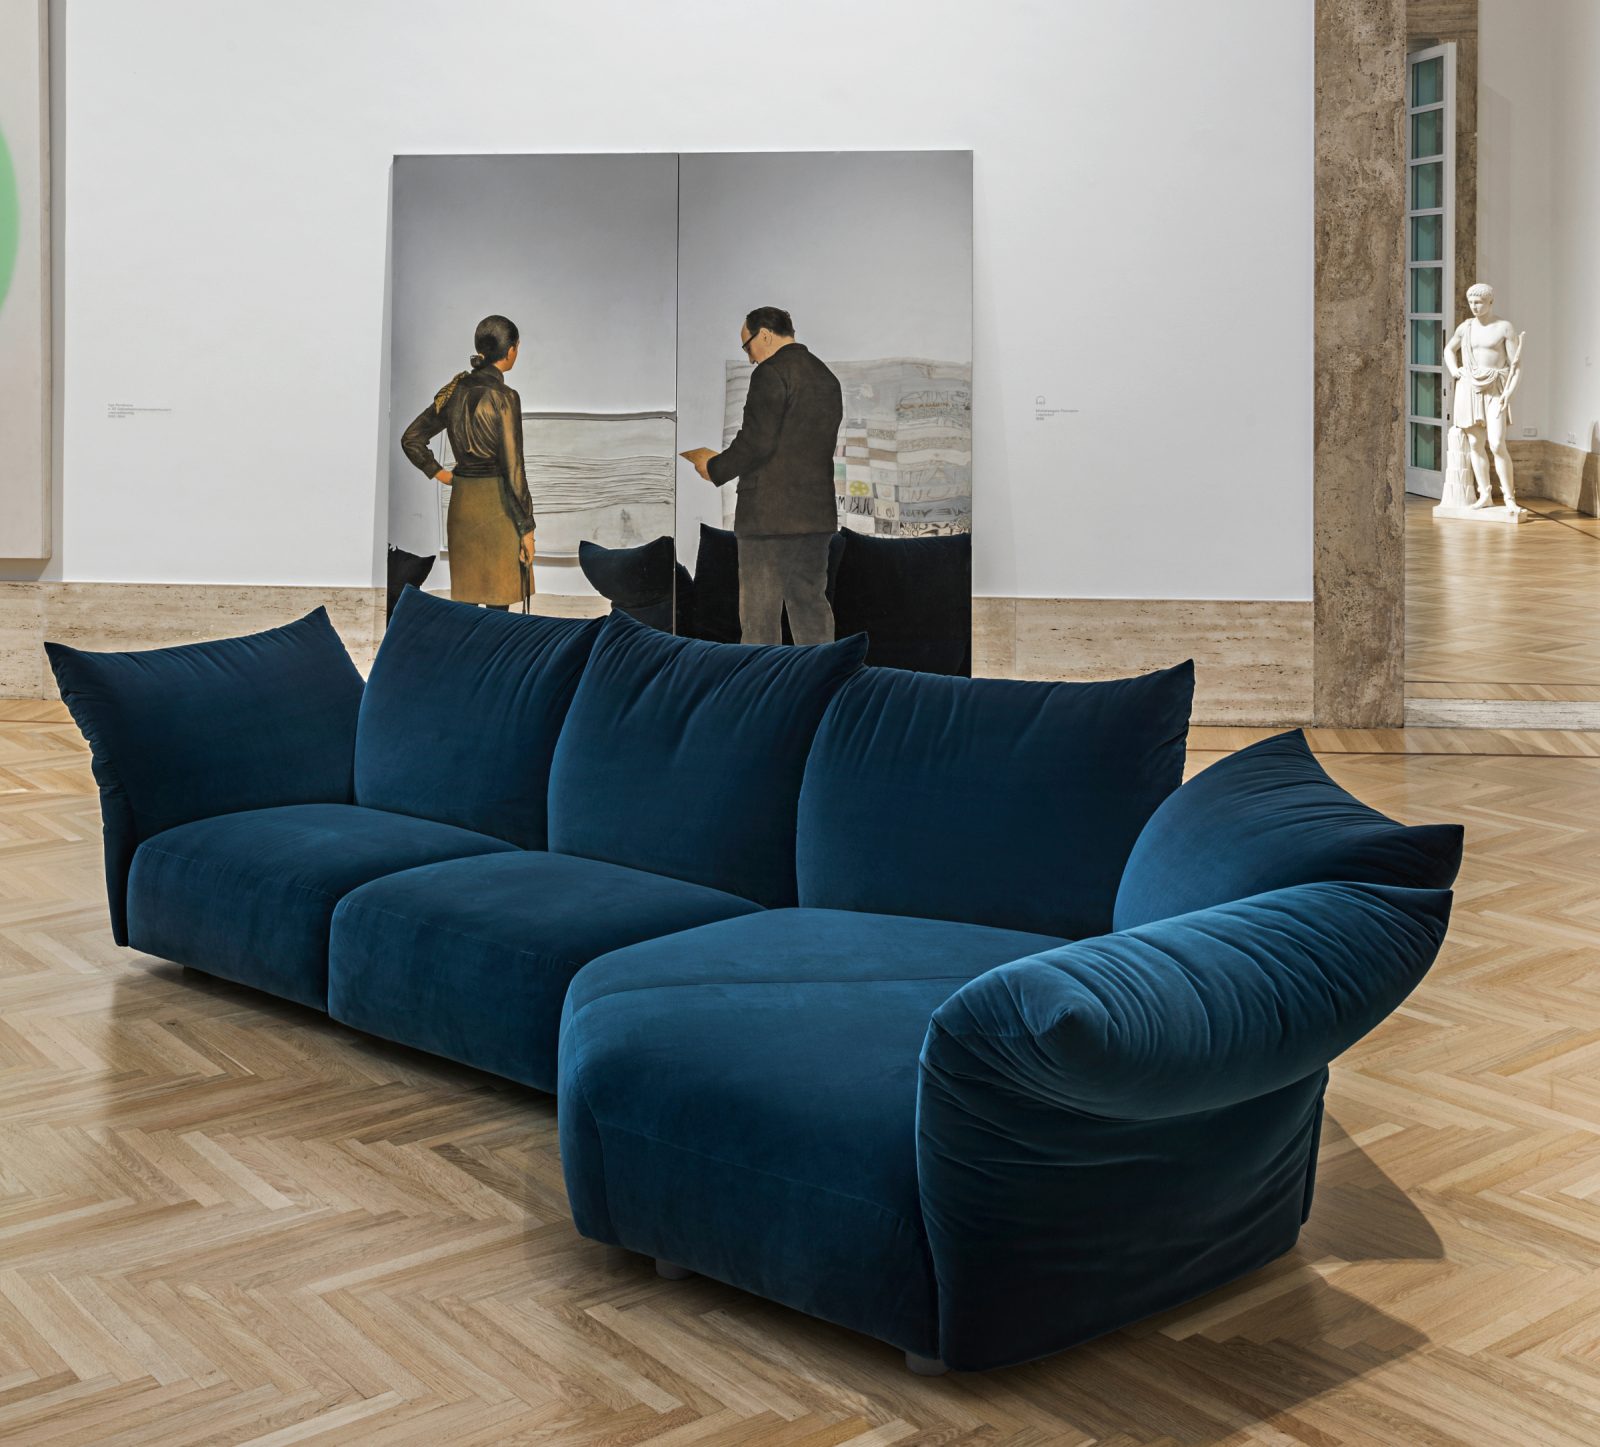 Blue Standard sofa by Edra feautered in an art gallery